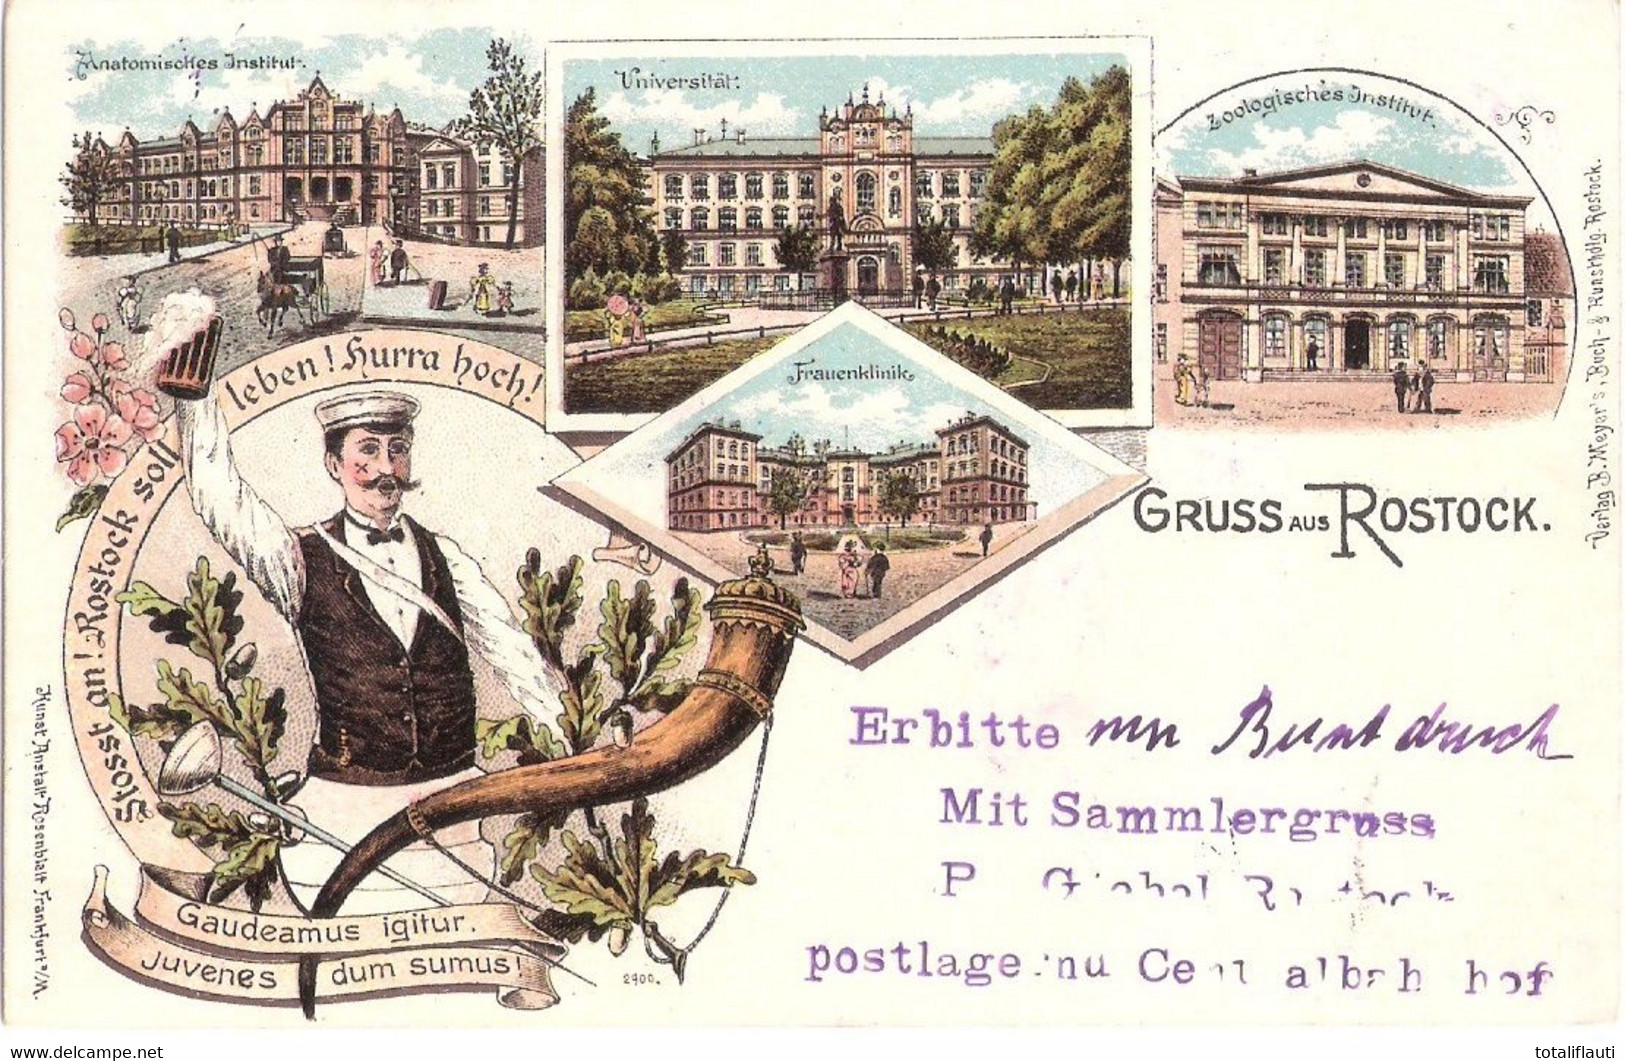 ROSTOCK Studentika Gaudeamus Igitur Juvenes Dum Sumus! Universität Kliniken Color Litho Sammlerstempel P Giebel 1898 - Rostock